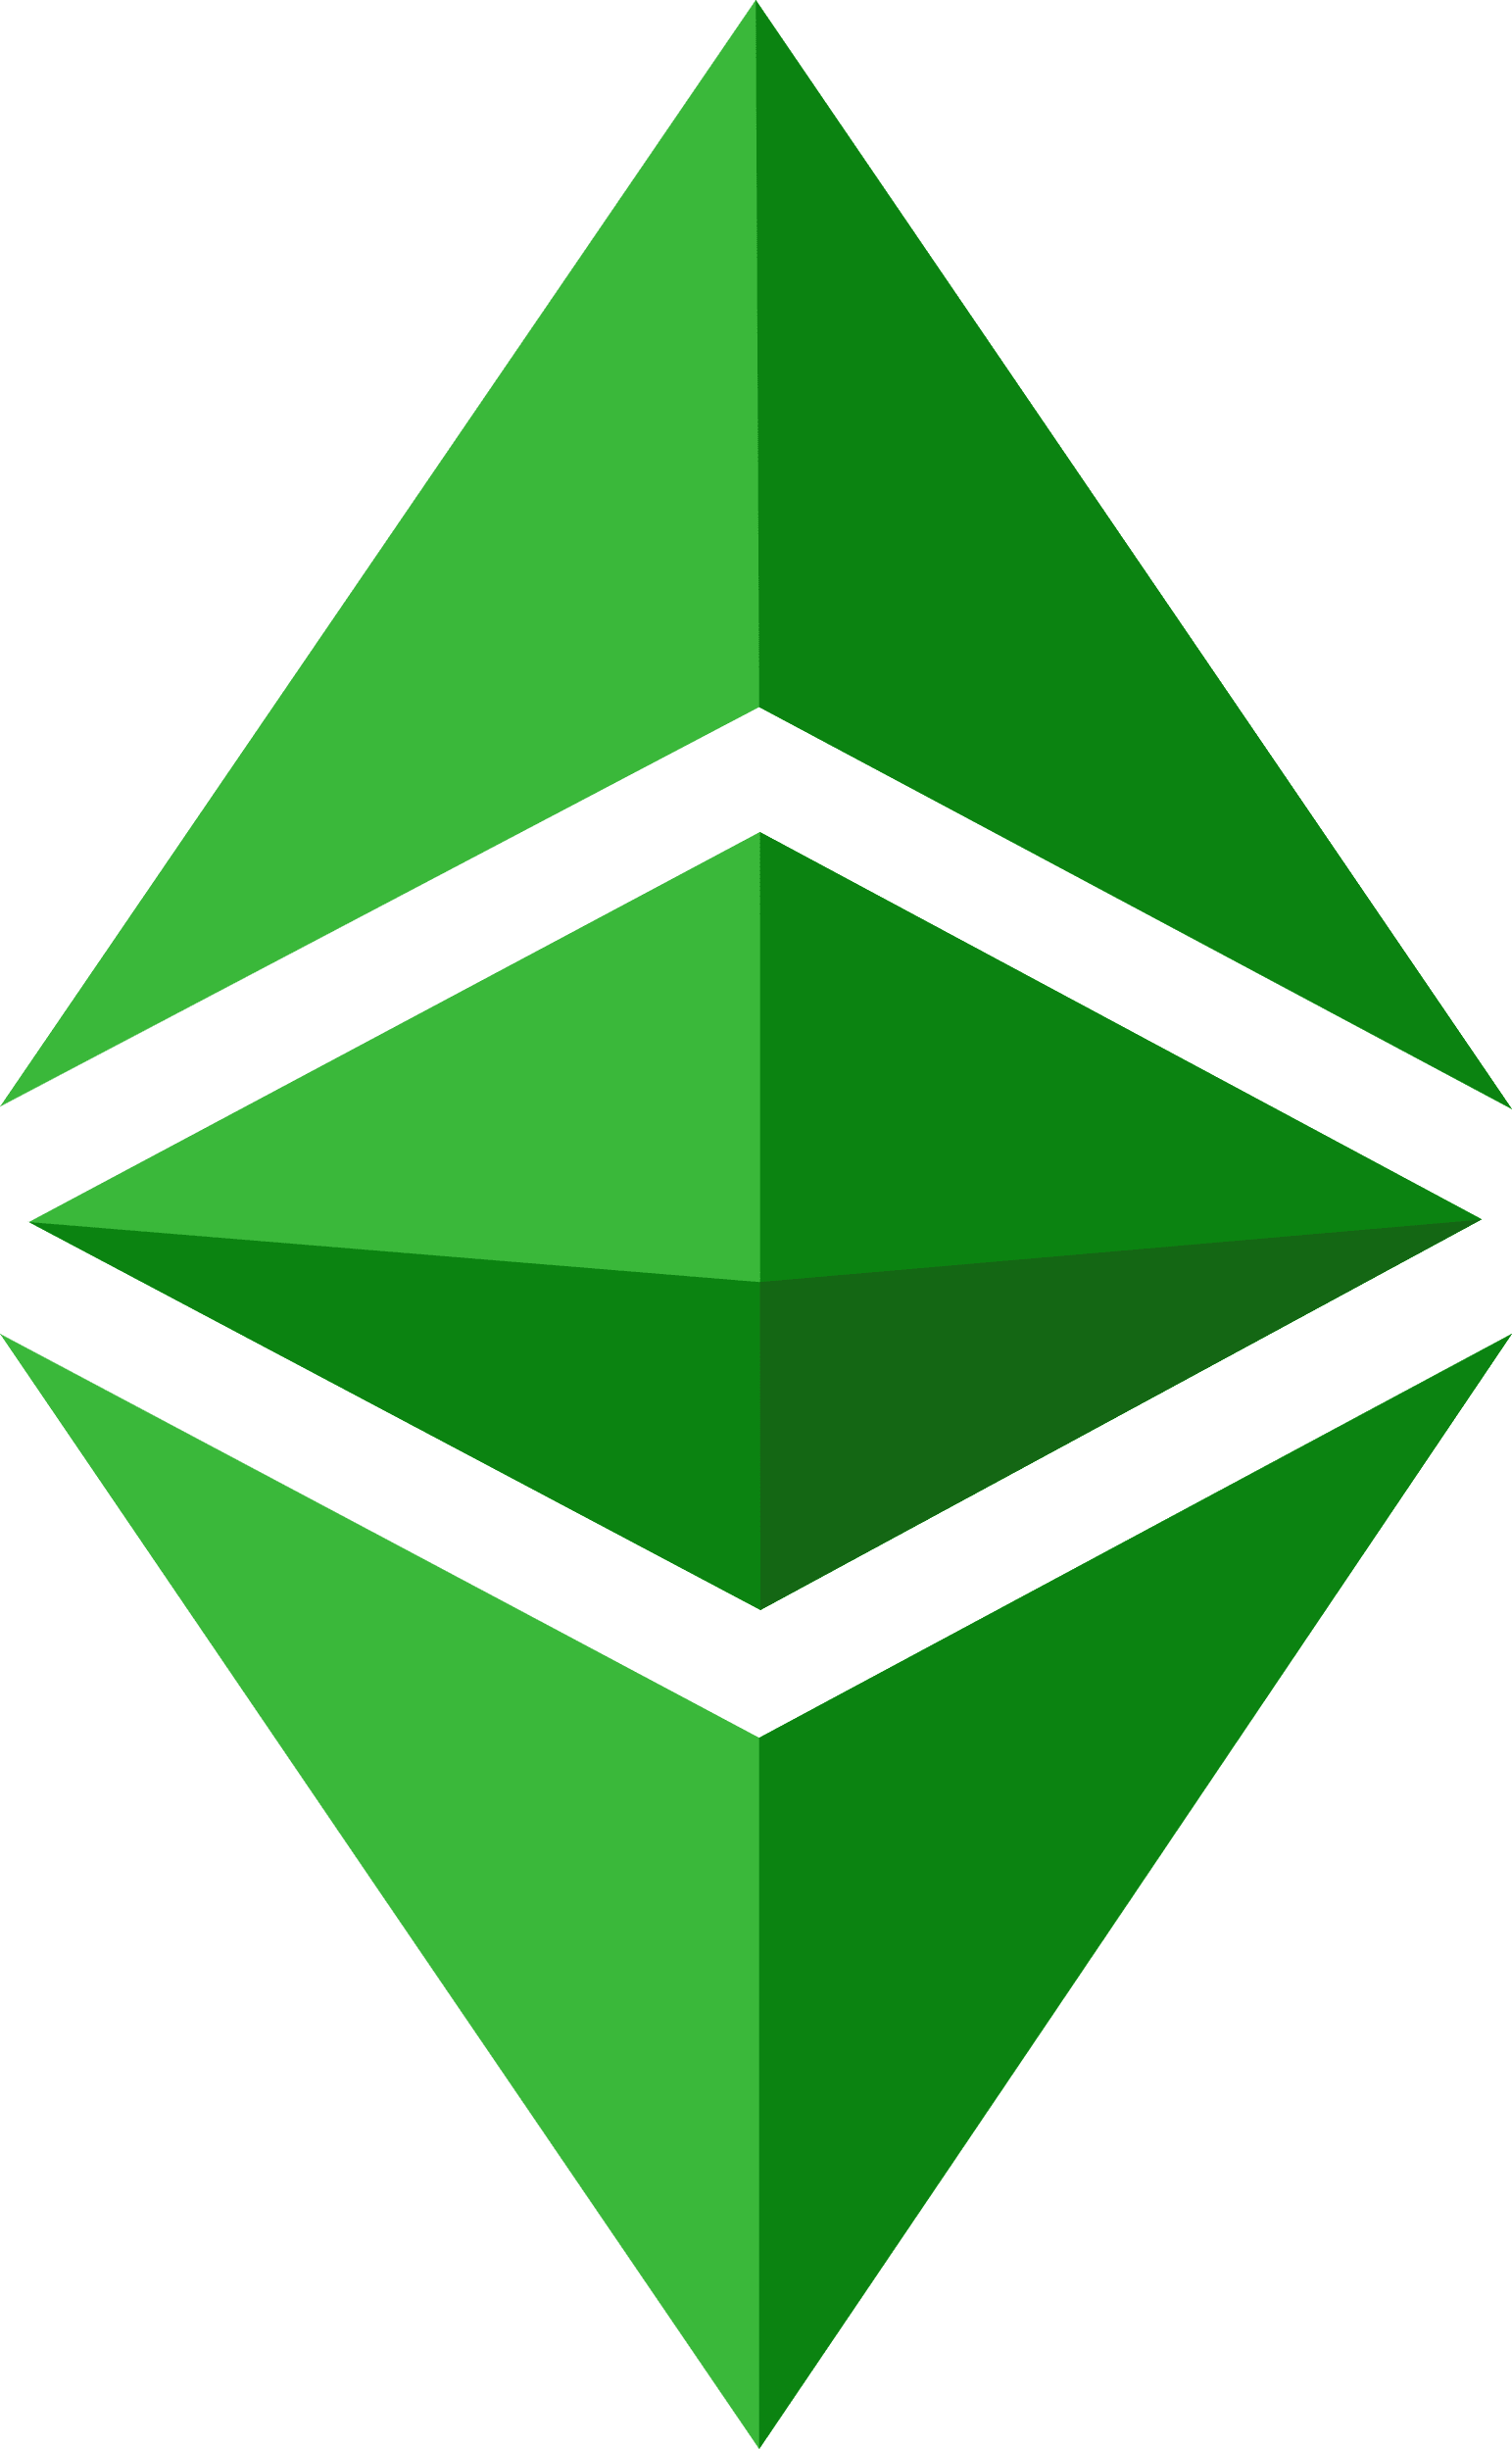 Ethereum Classic logo in svg format